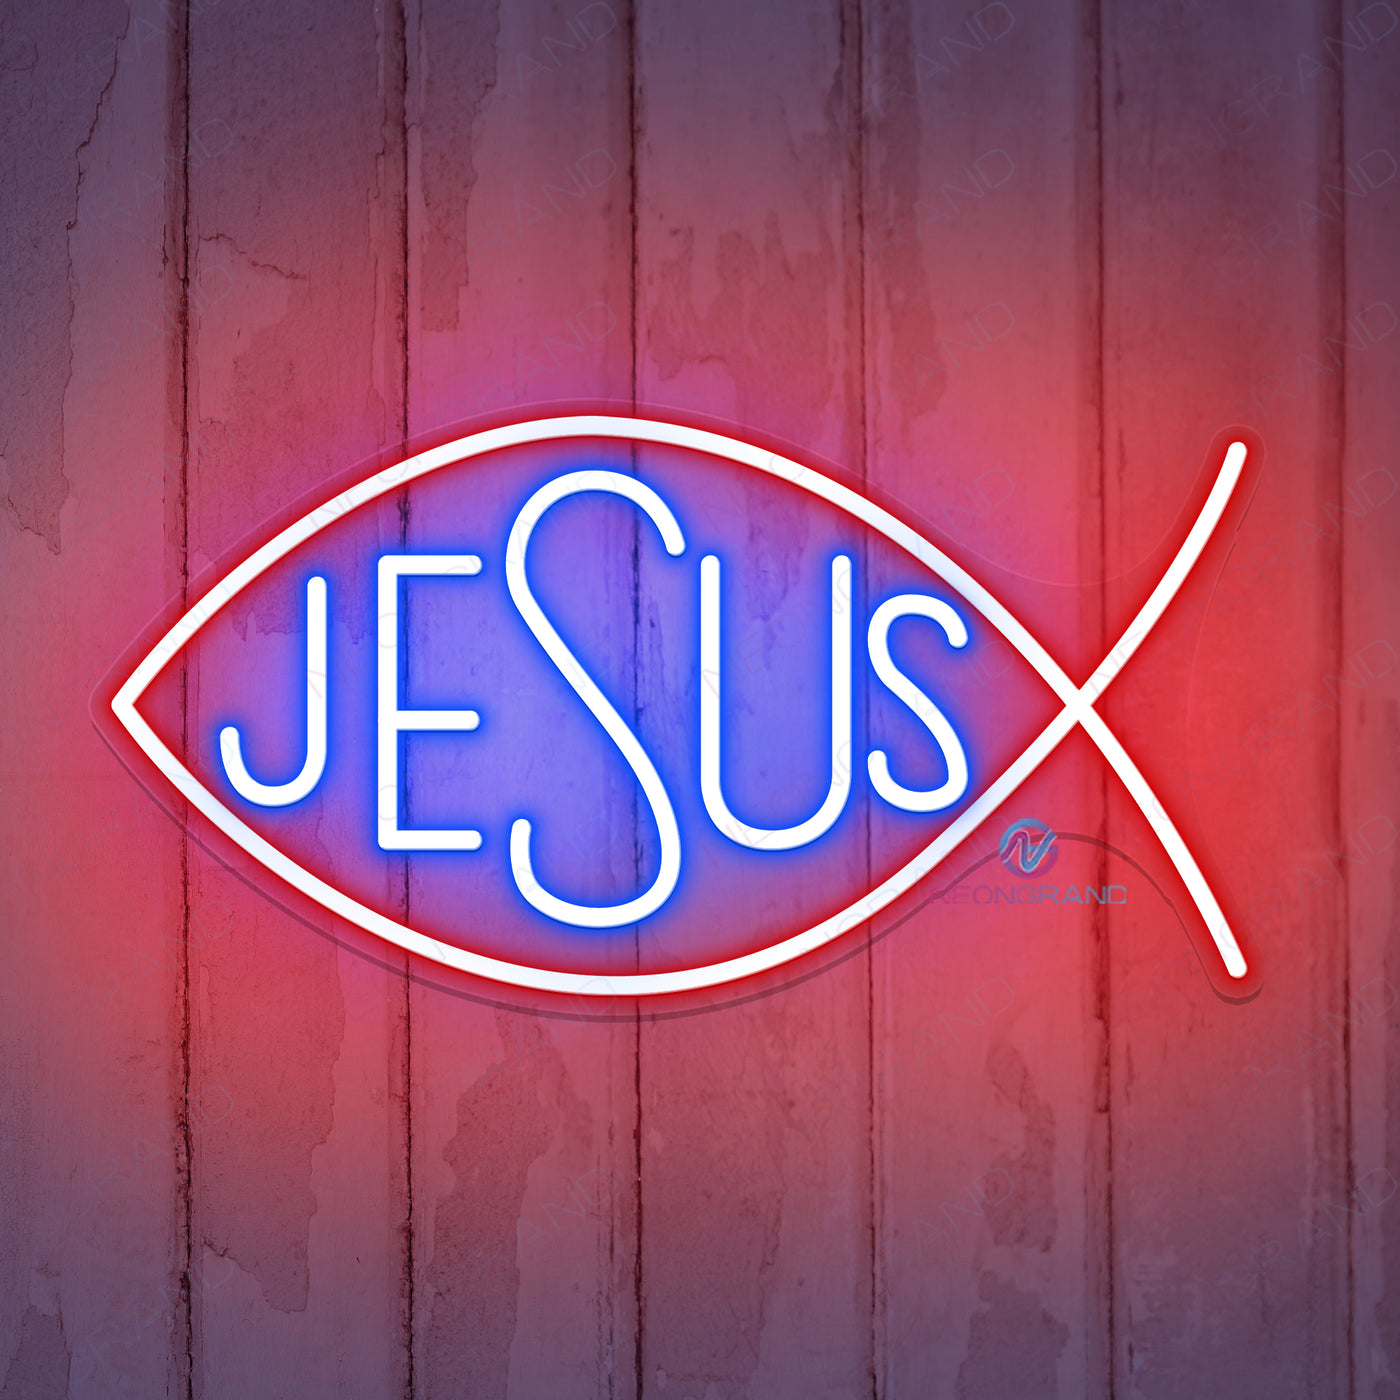 Jesus Fish Neon Sign Cool Neon Sign